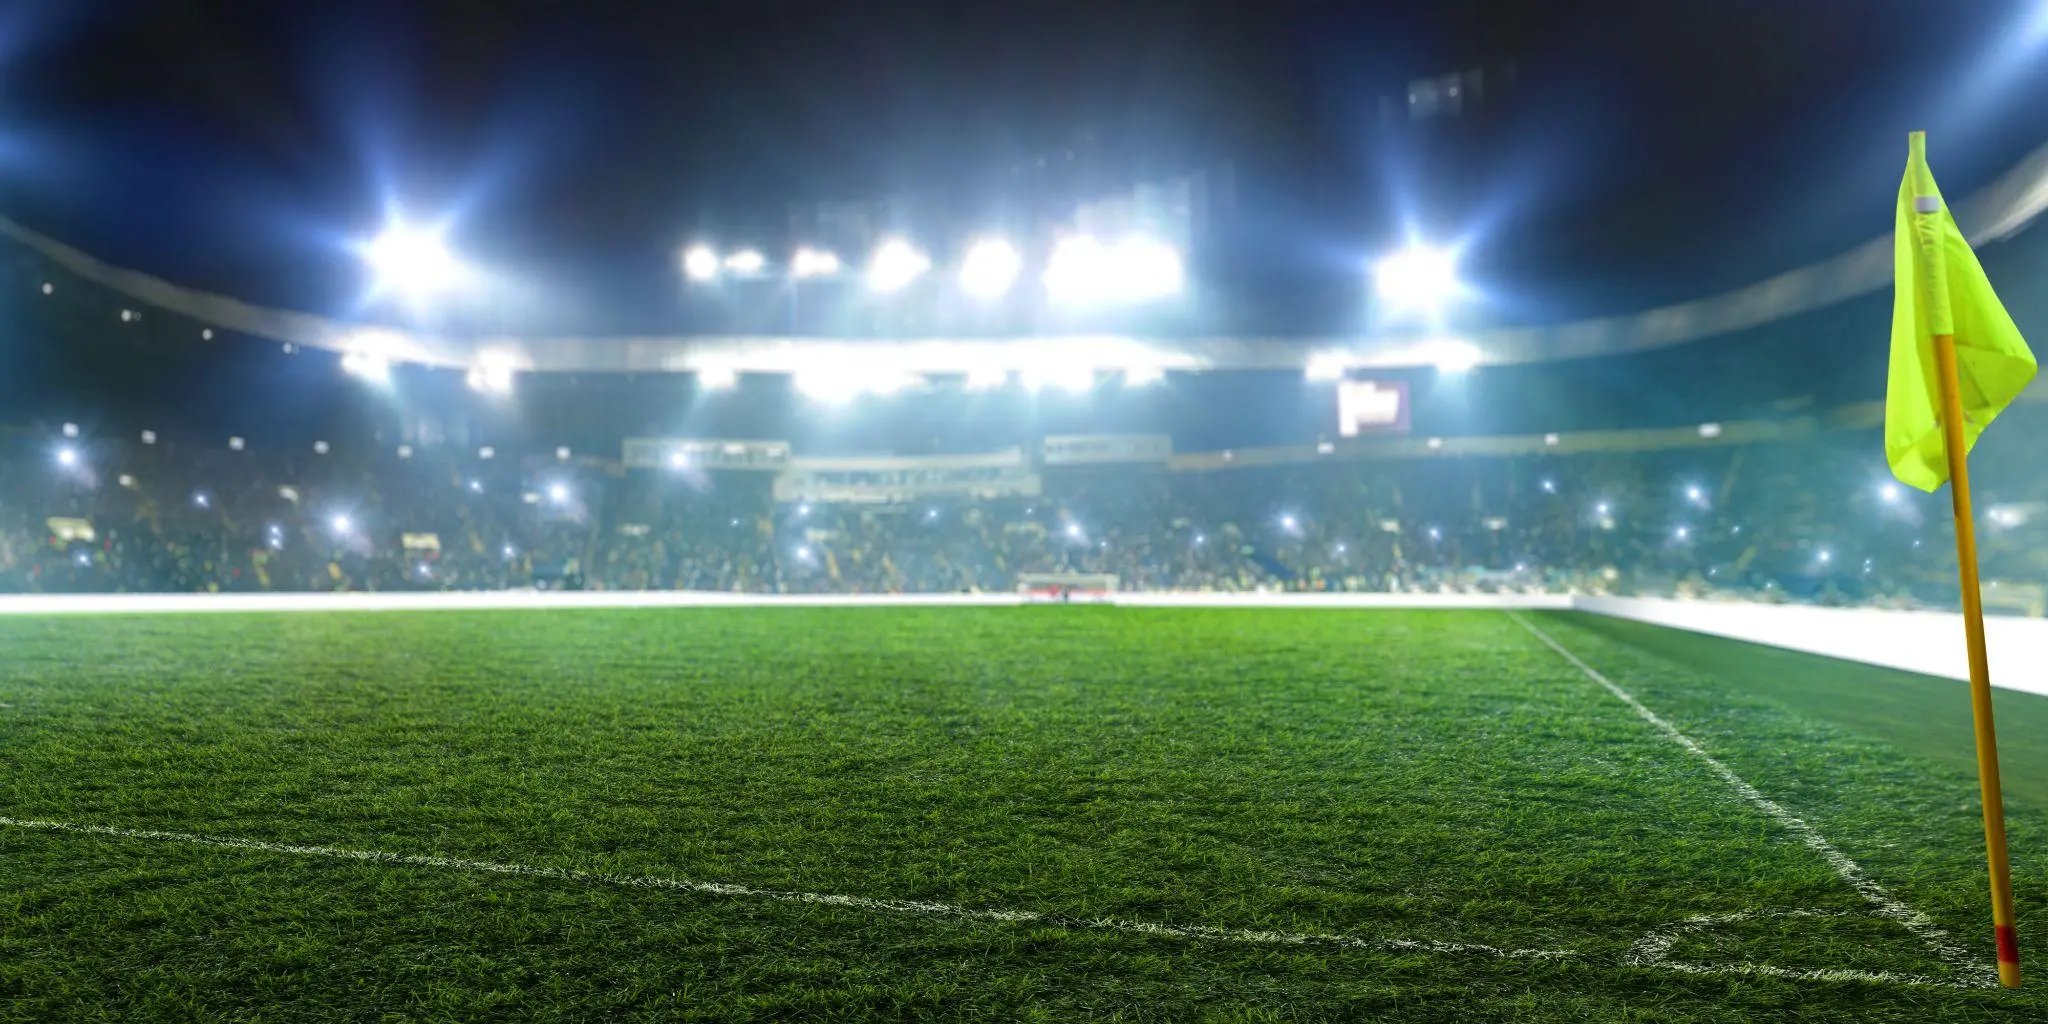 Football stadium, corner flag, shiny lights, view from field grass